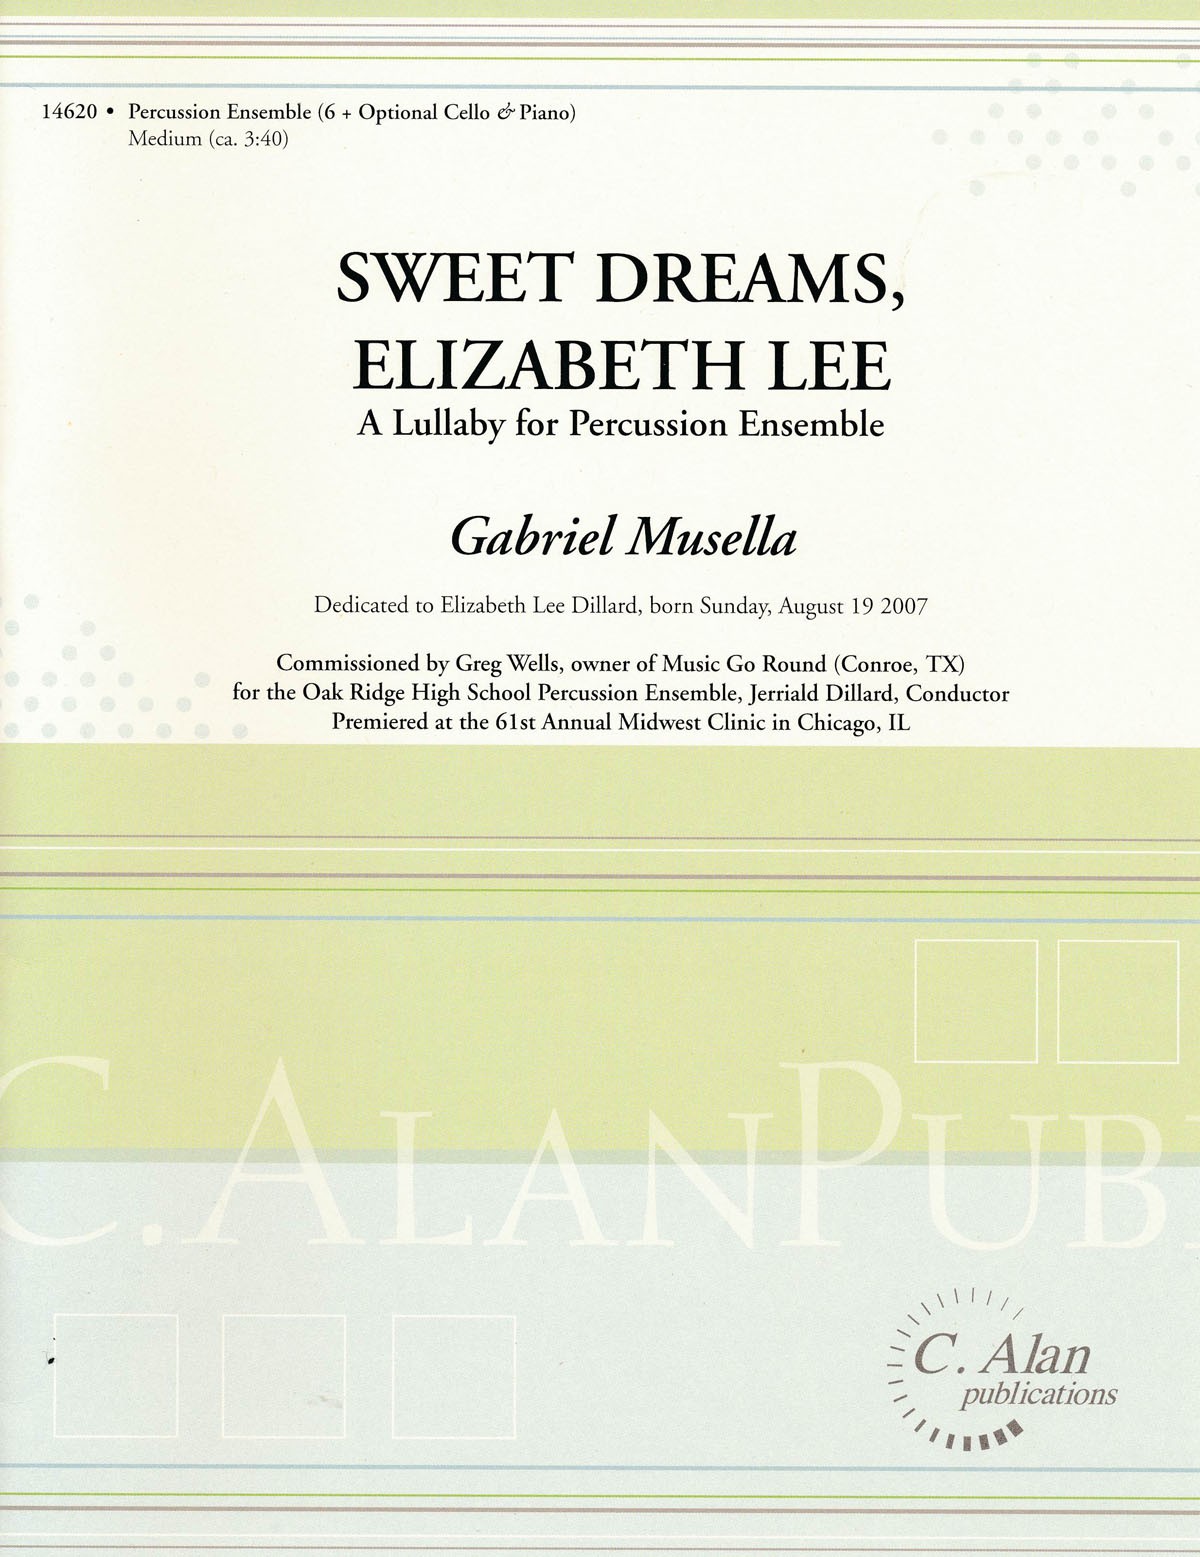 Sweet Dreams, Elizabeth Lee by Gabriel Musella